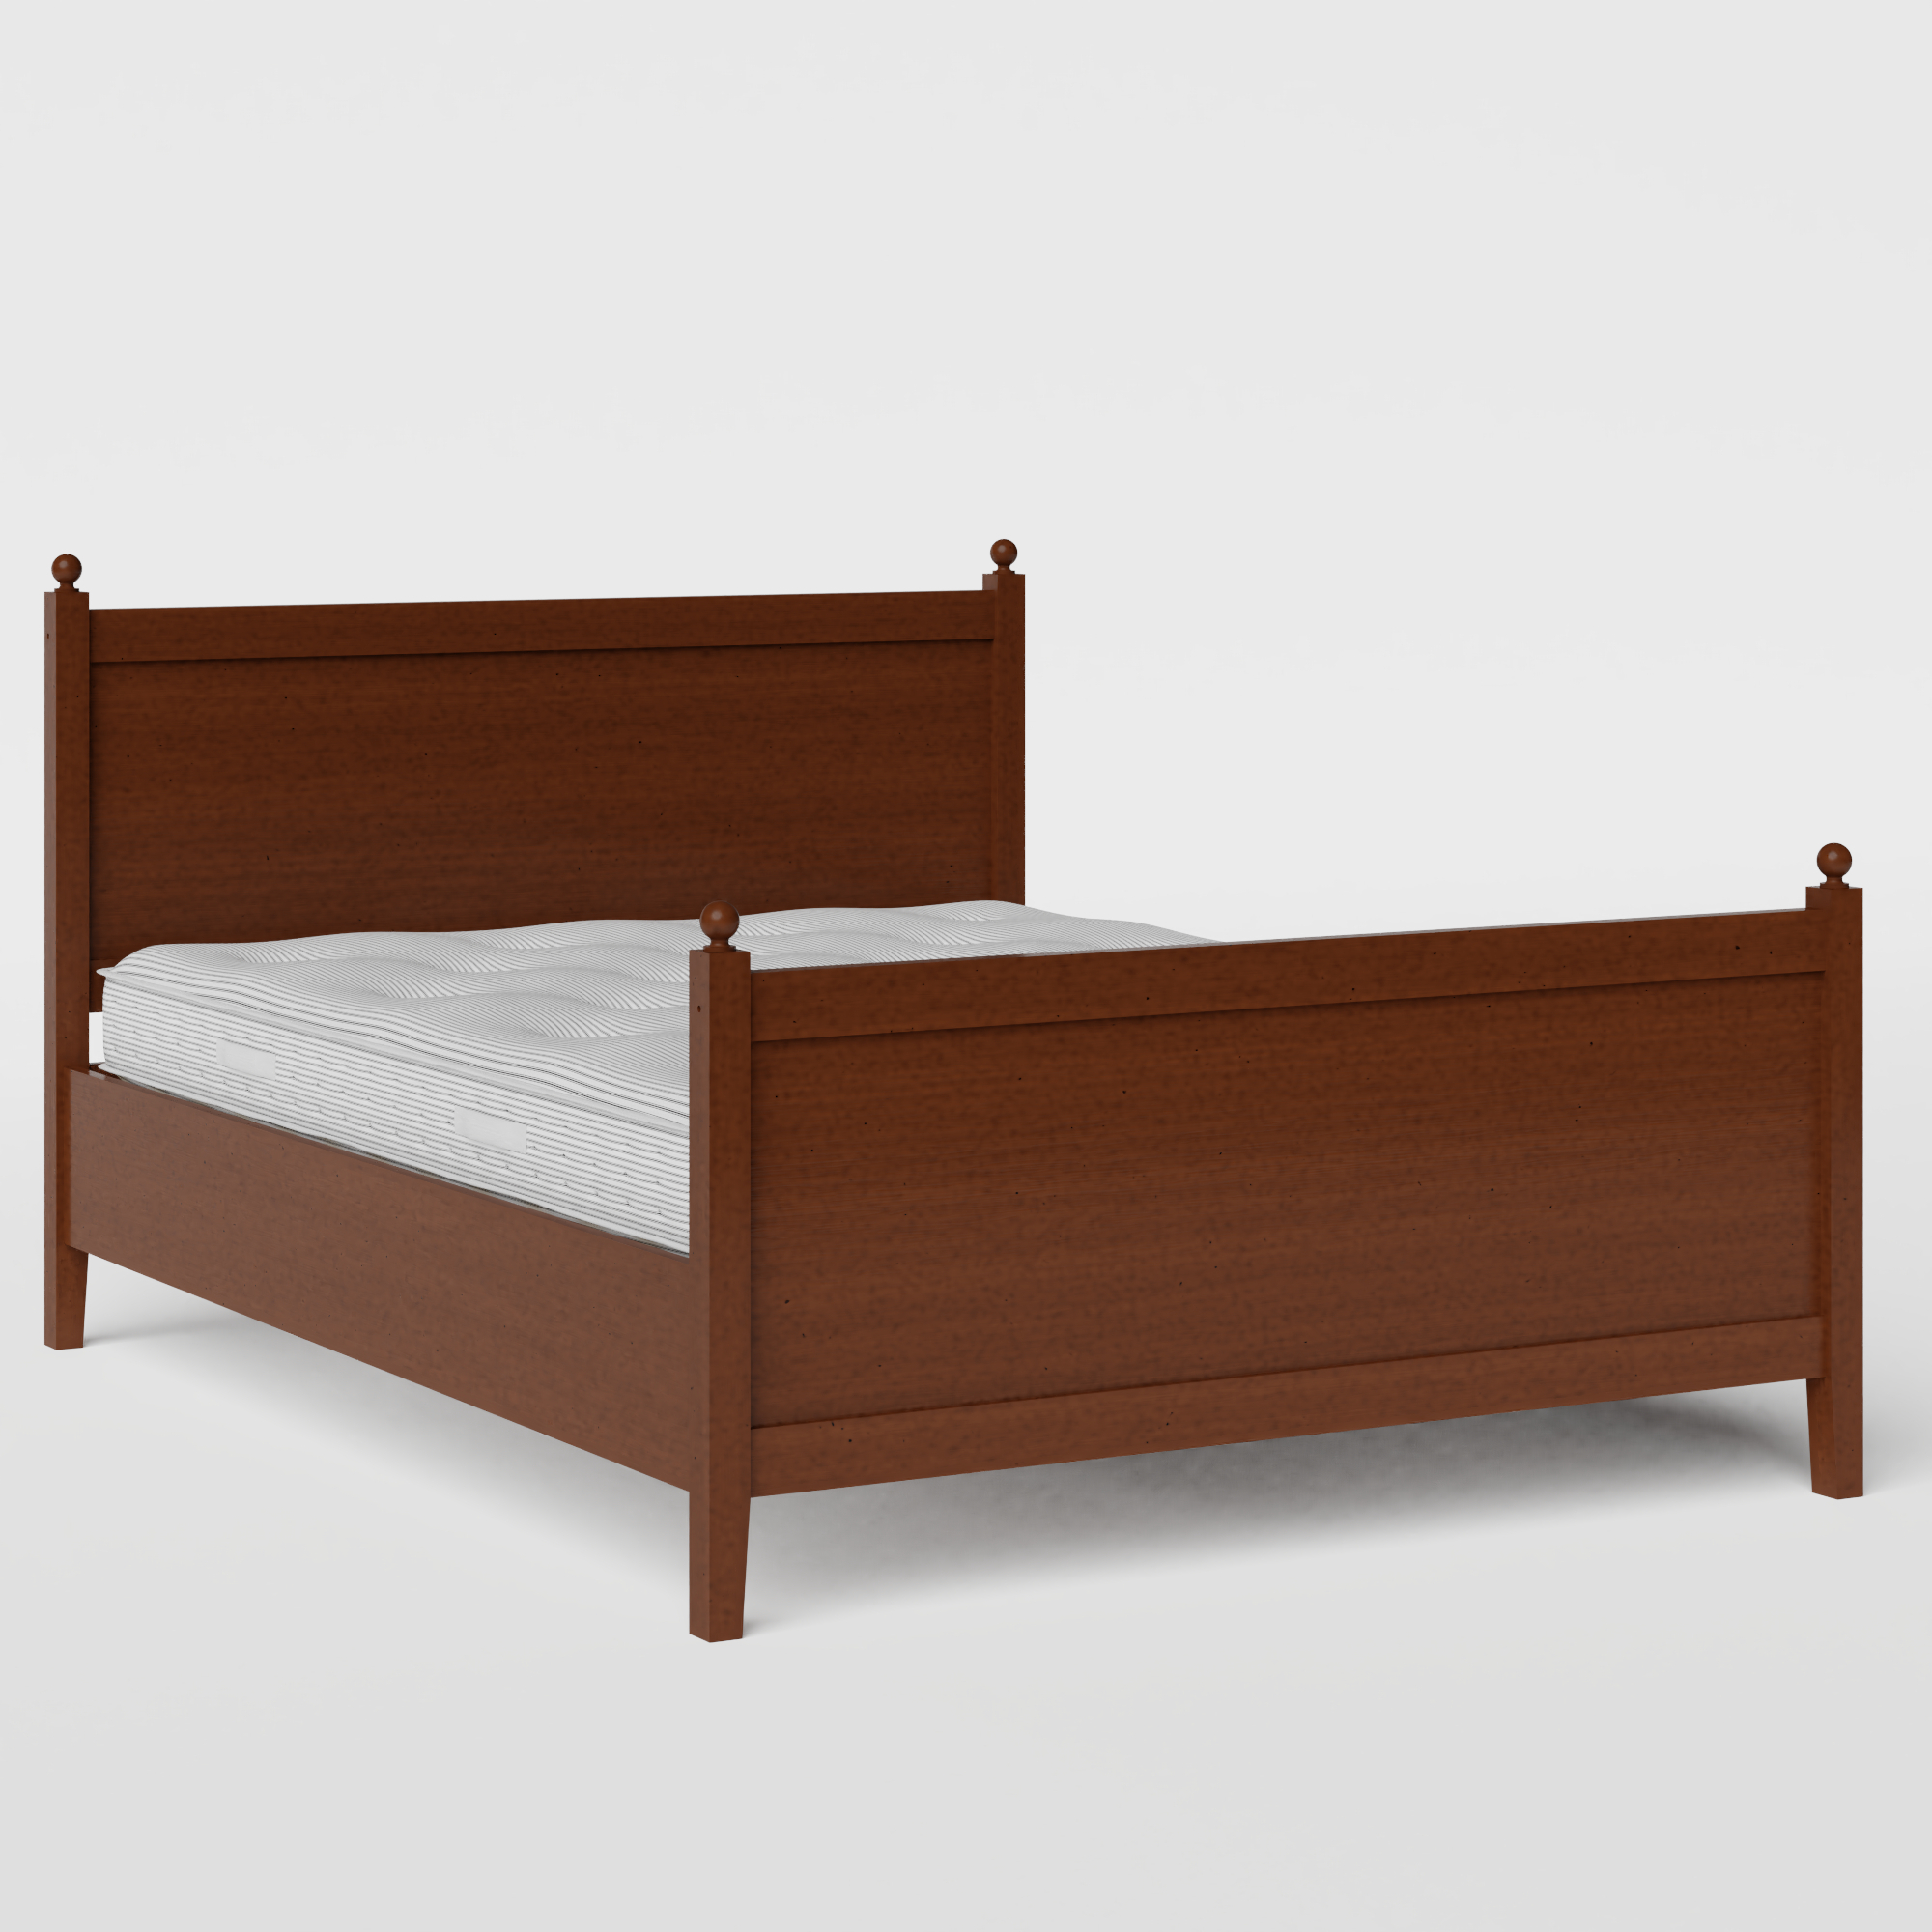 Marbella wood bed in dark cherry with Juno mattress